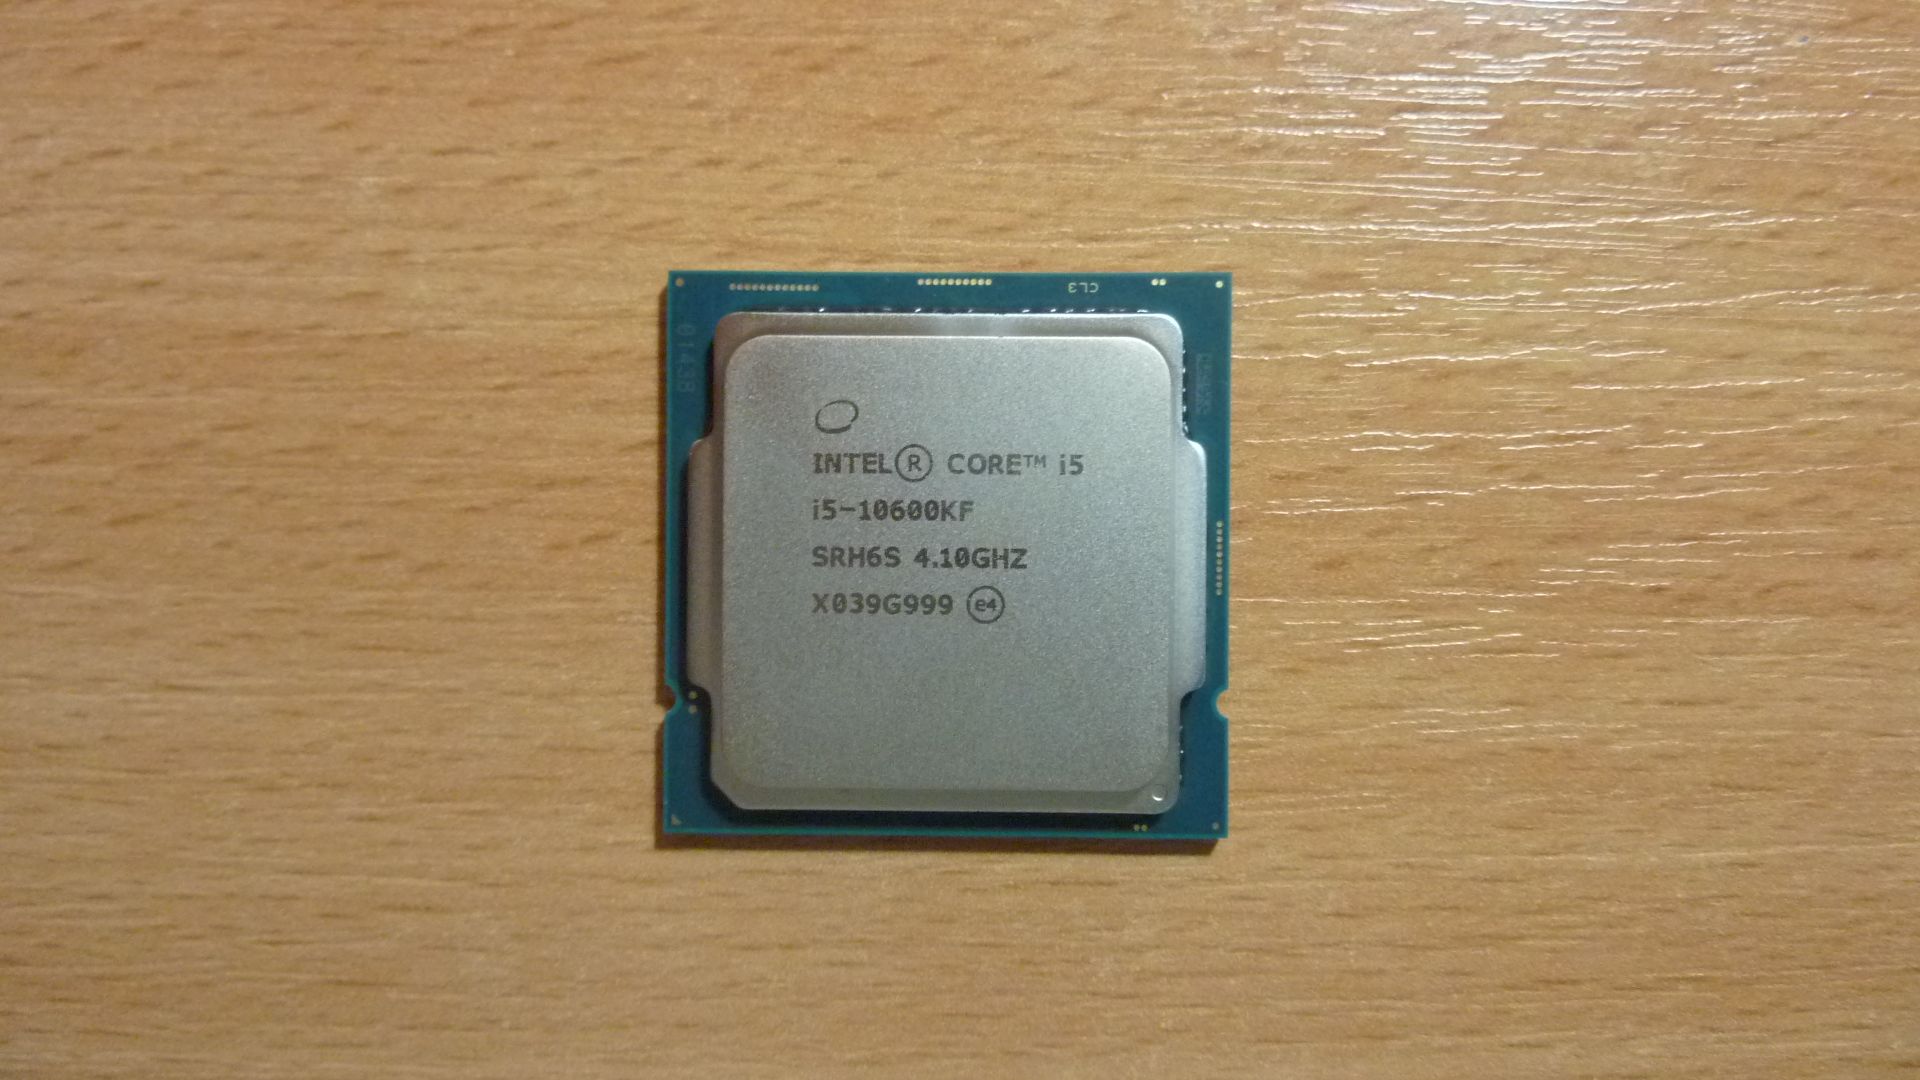 12600kf характеристики. Процессор Intel Core i5-10600kf OEM. Процессор Intel Core i5 10600kf OEM cm8070104282136. Intel(r) Core (TM) i5-10600kf. Intel Core i5-10600kf (Box).